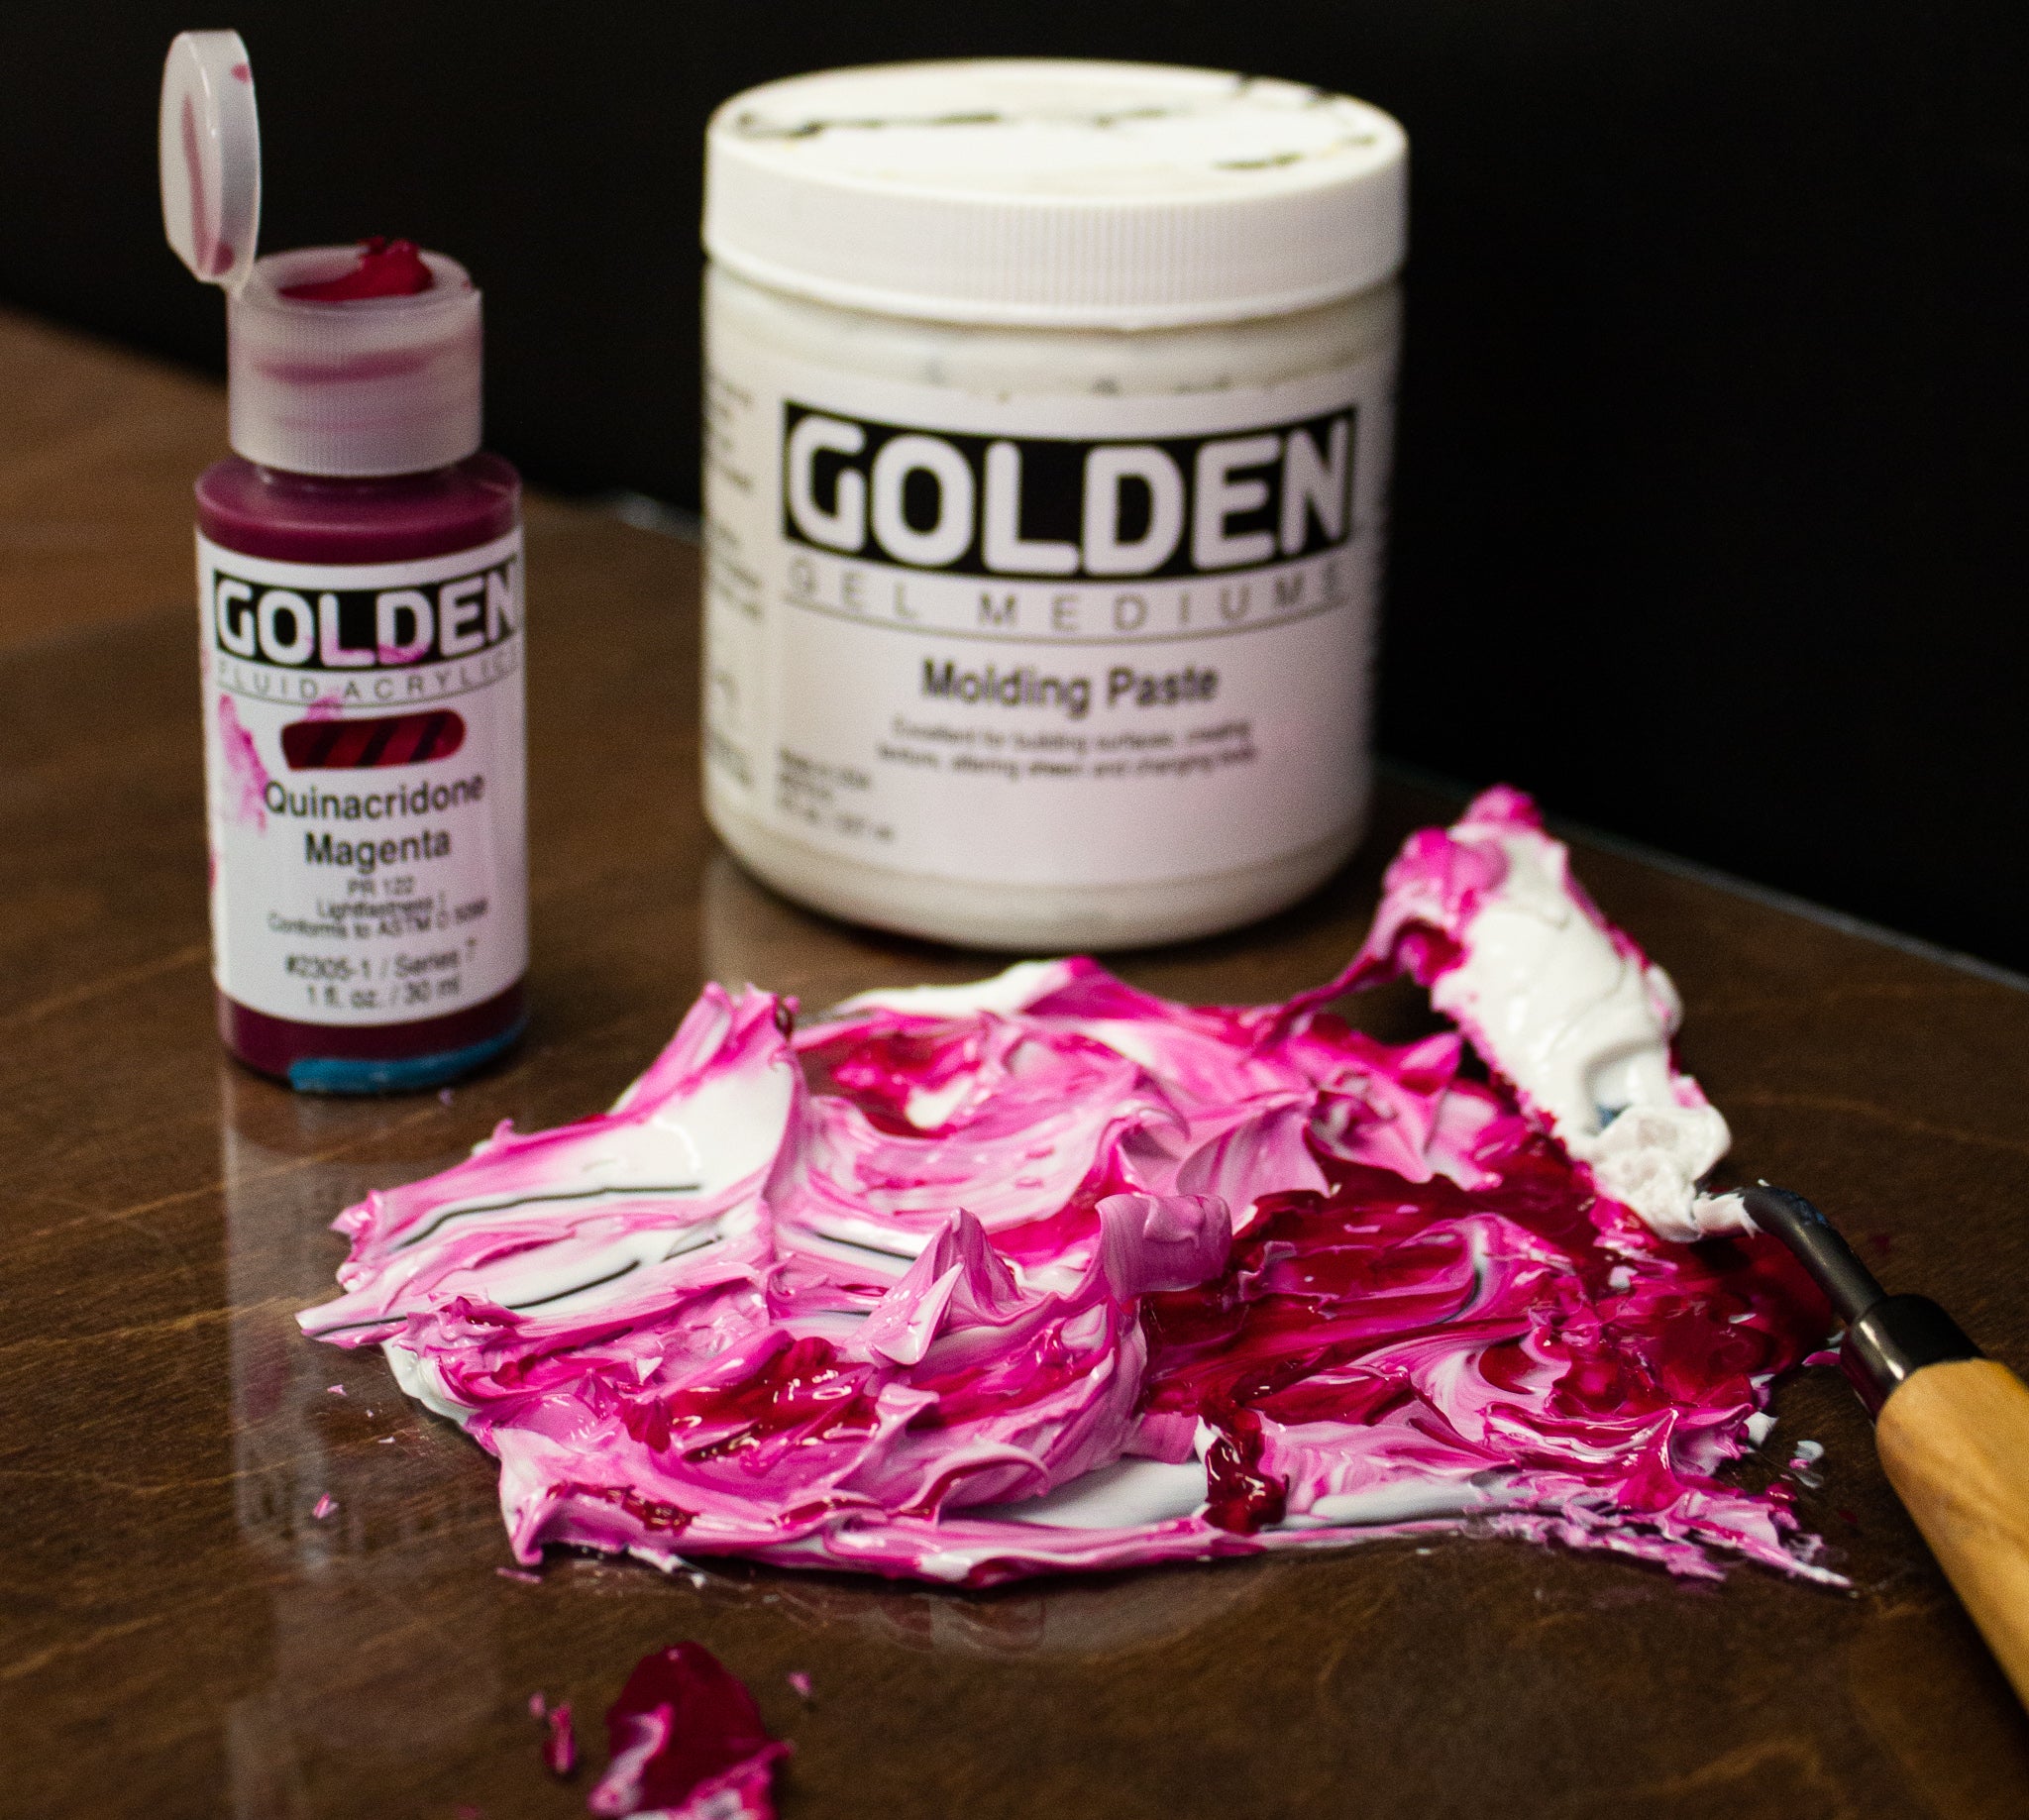 GOLDEN Molding Paste mixed with Quinacridone Magenta Fluid Acrylic